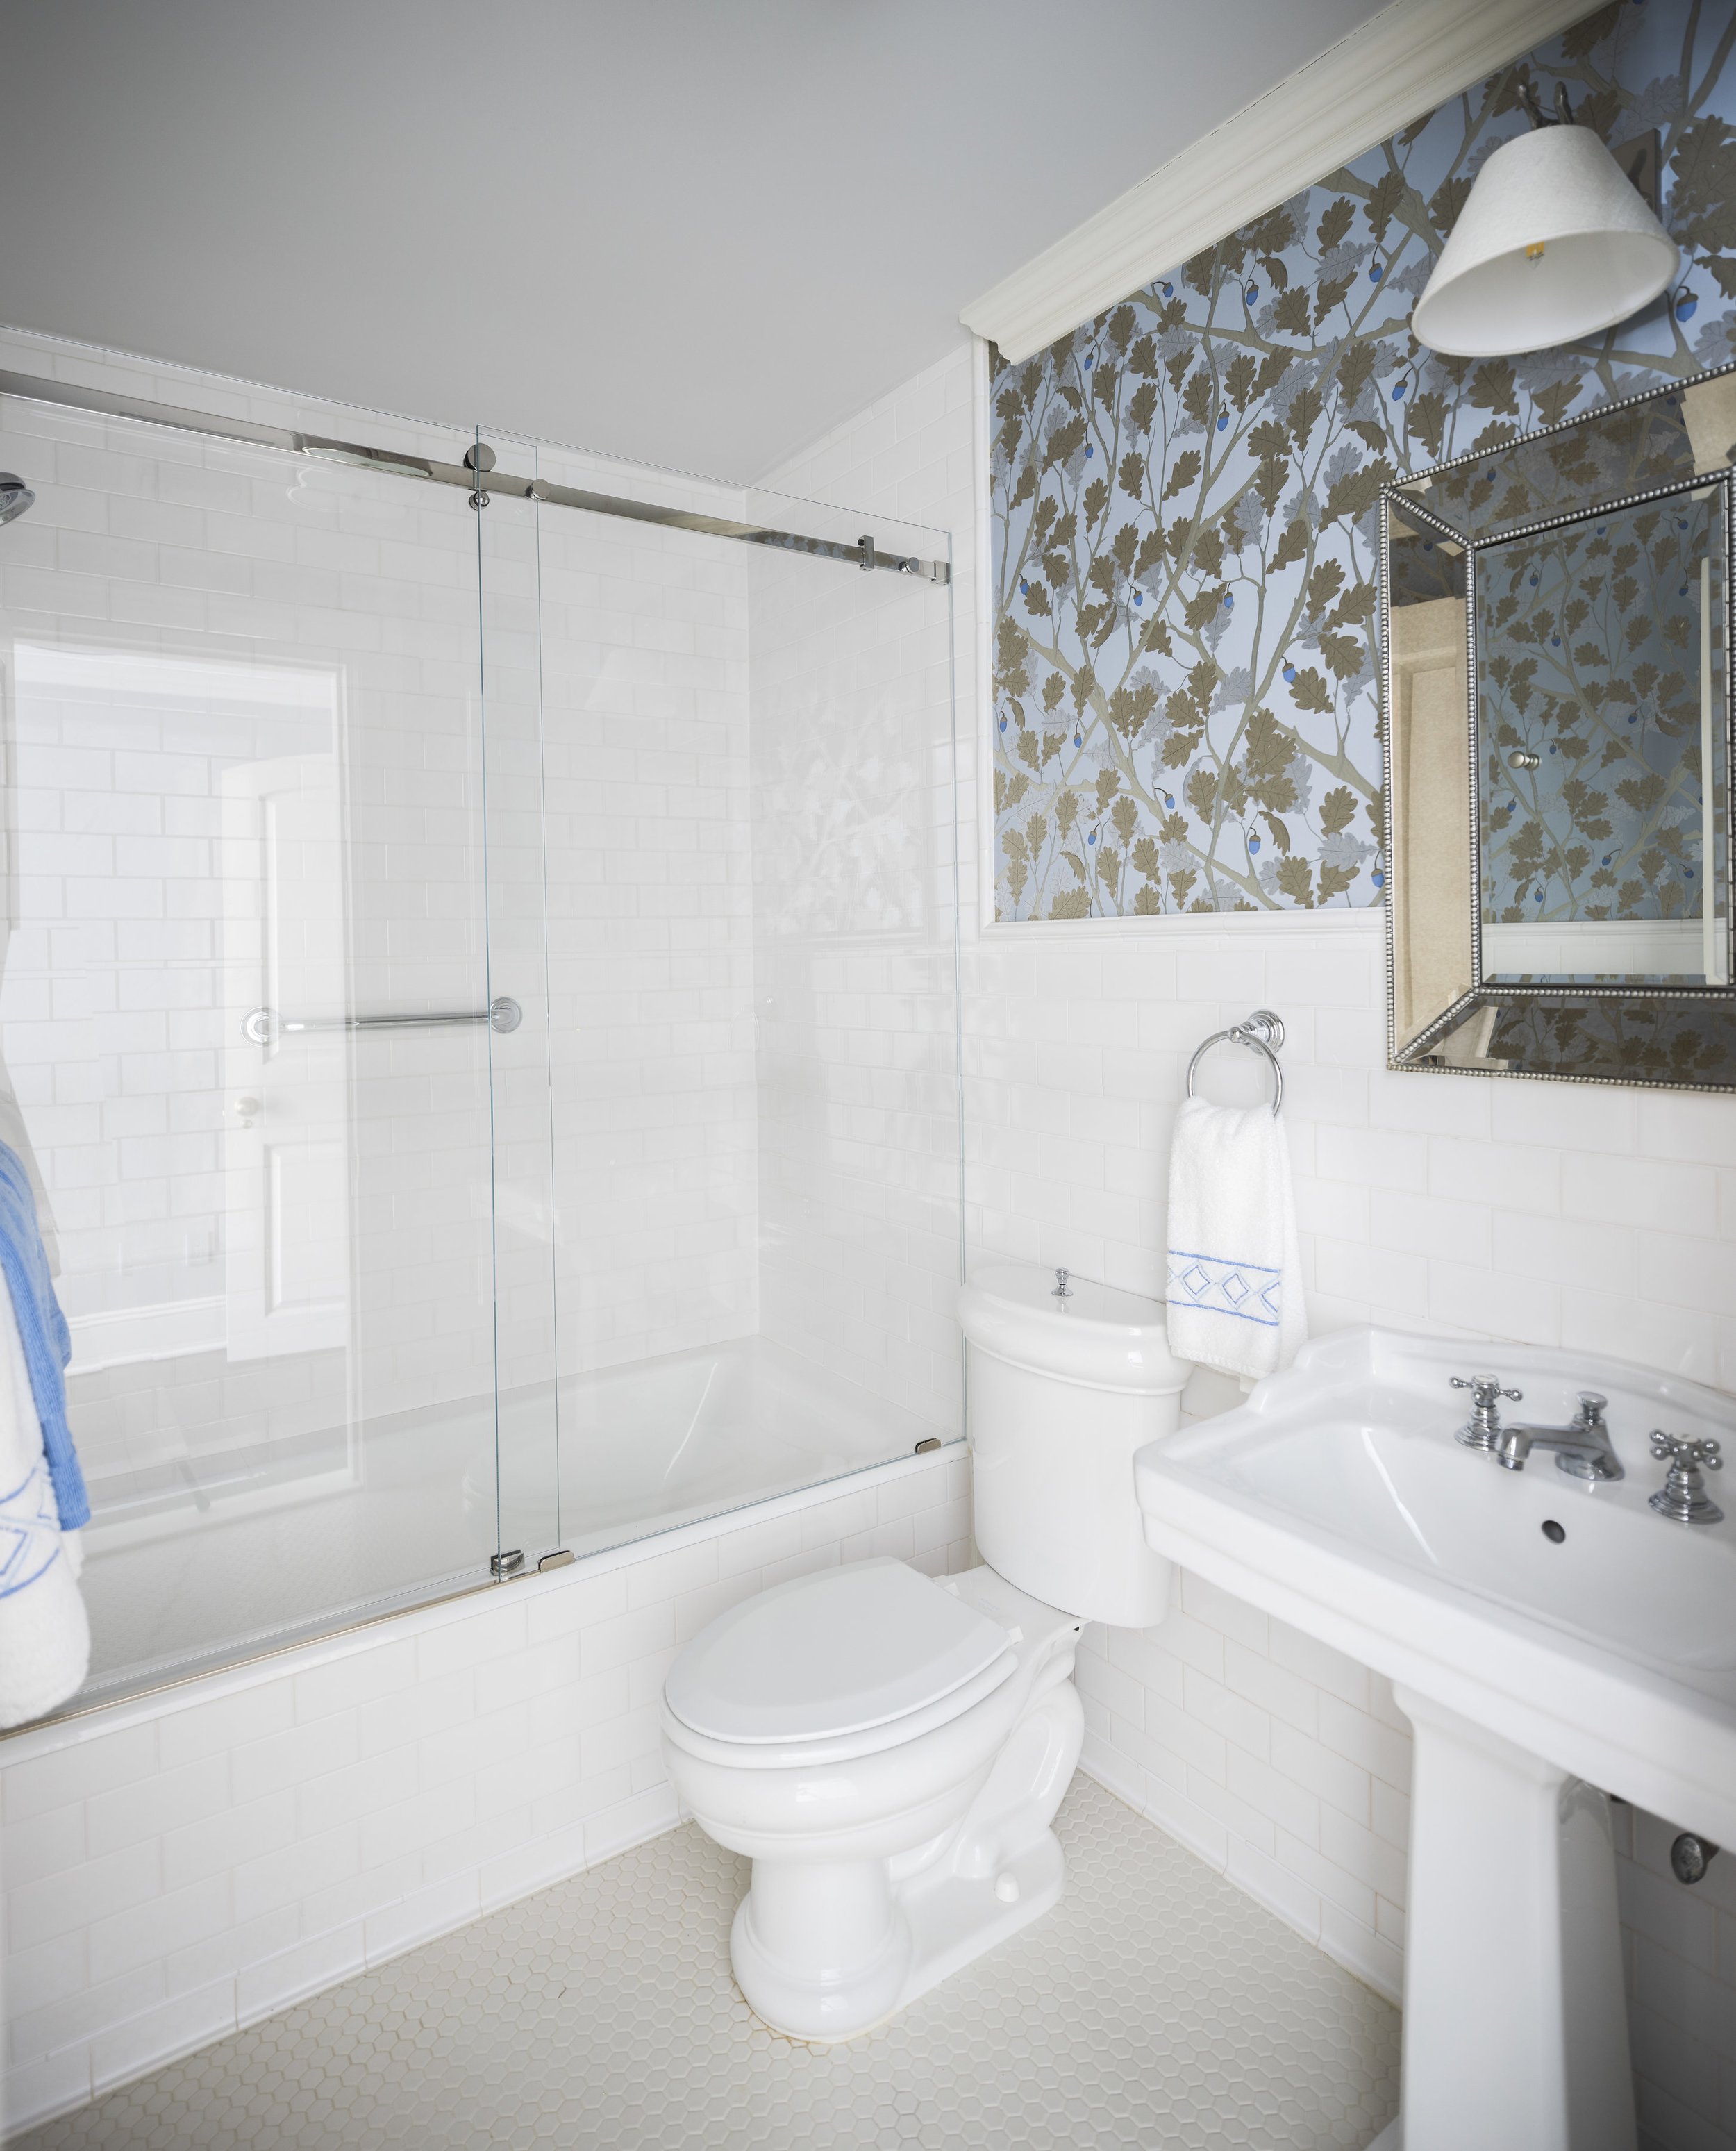 66-bathroom-wallpaper-white-rinfret-neoclassical-greenwich-connecticut.JPG